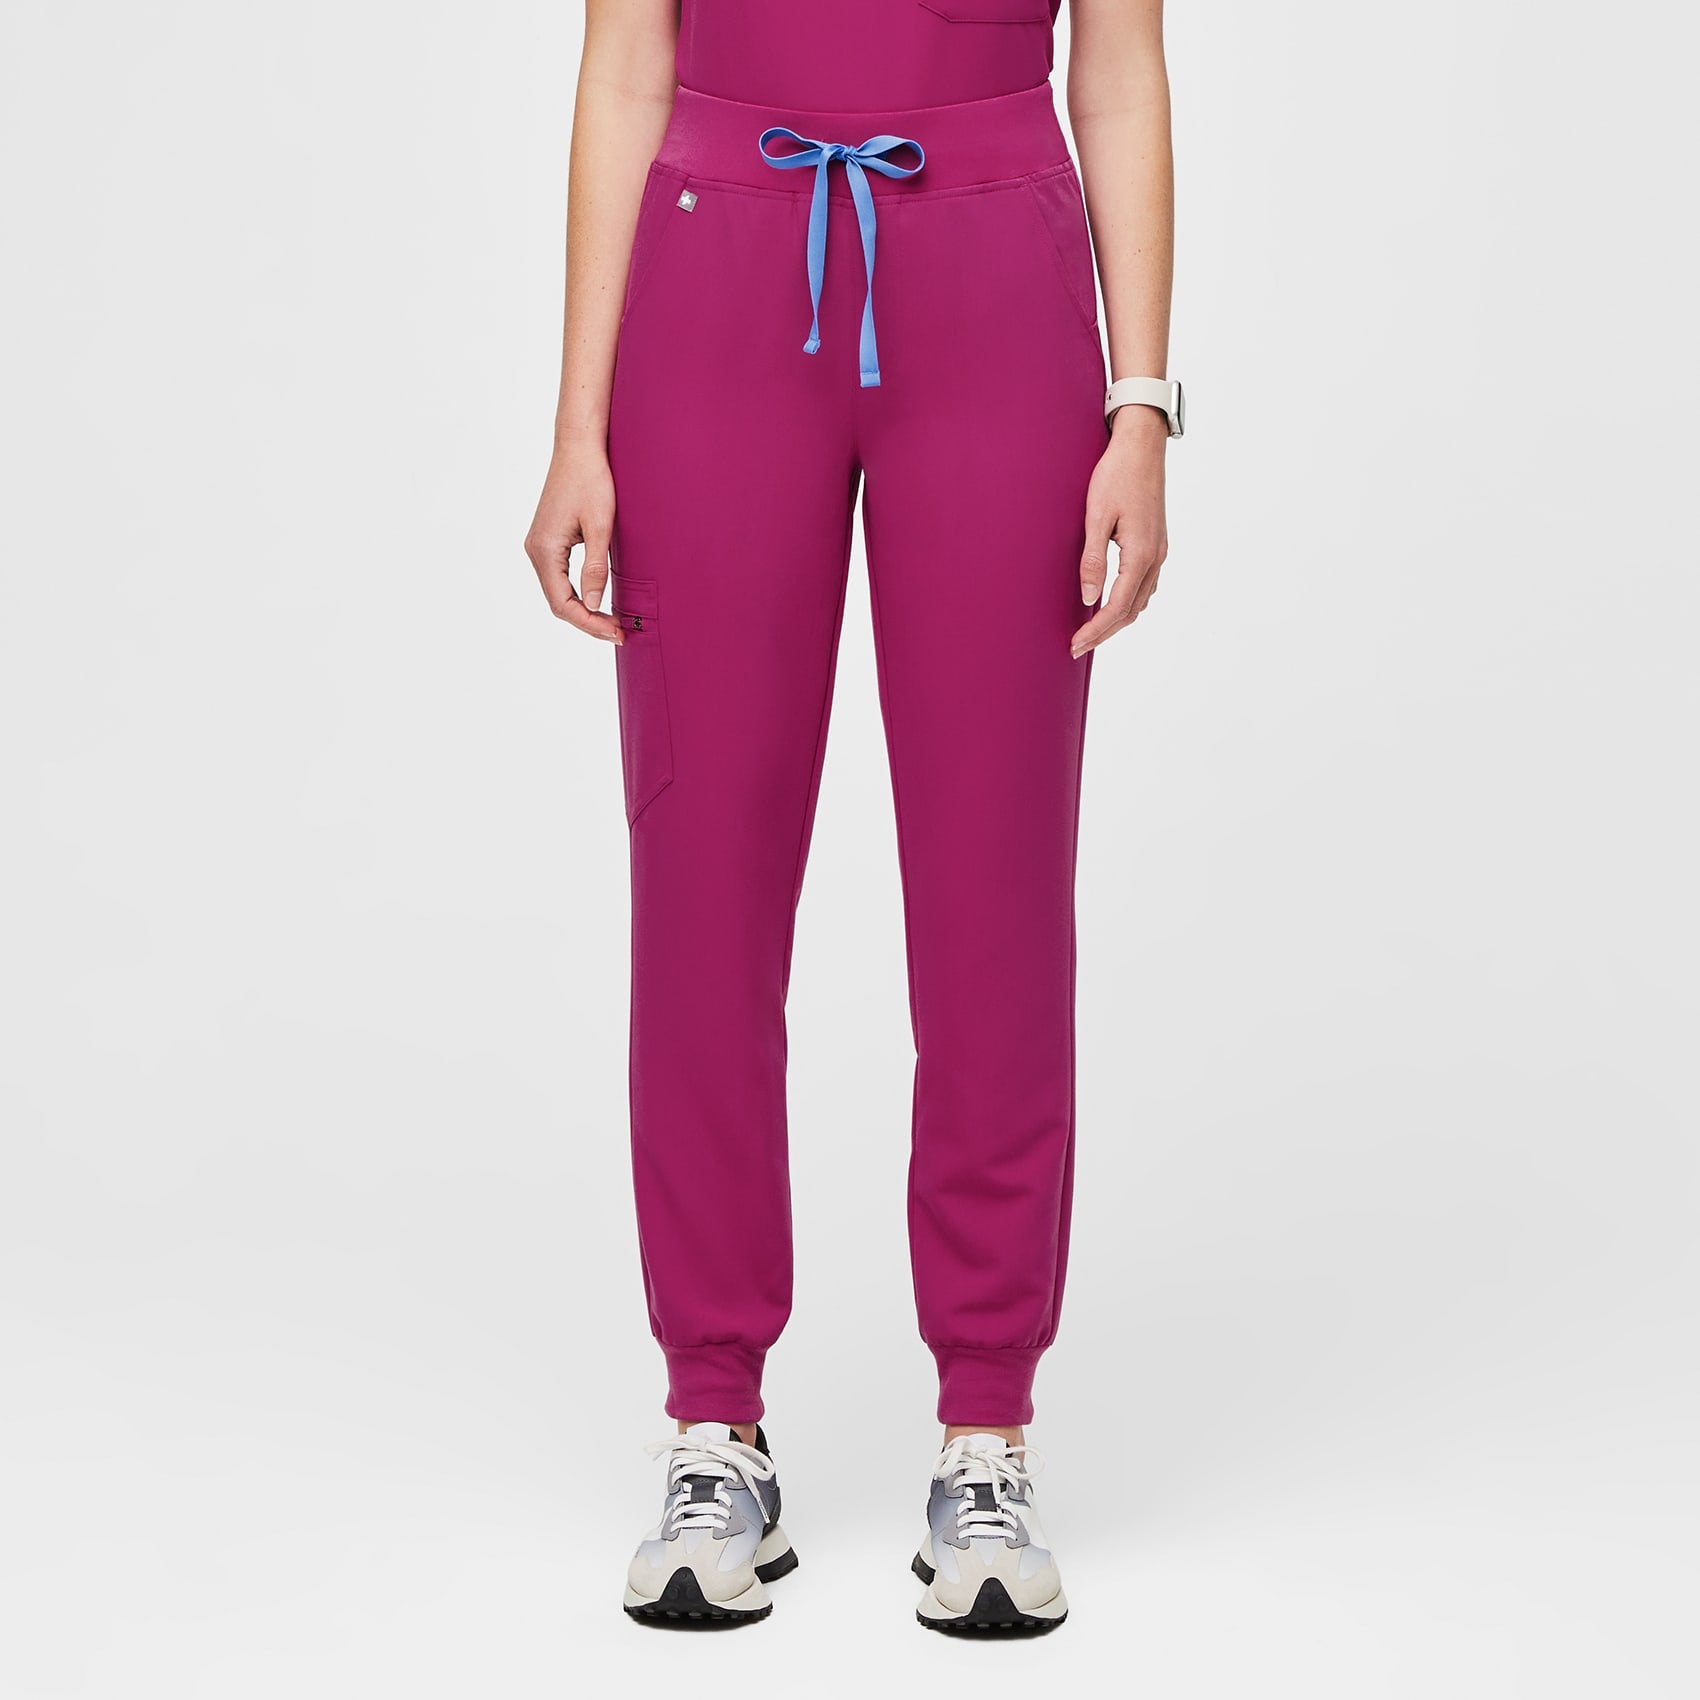 Pantalones deportivos de uniforme médico cintura alta Zamora™ para mujer -  Rosa ultra · FIGS